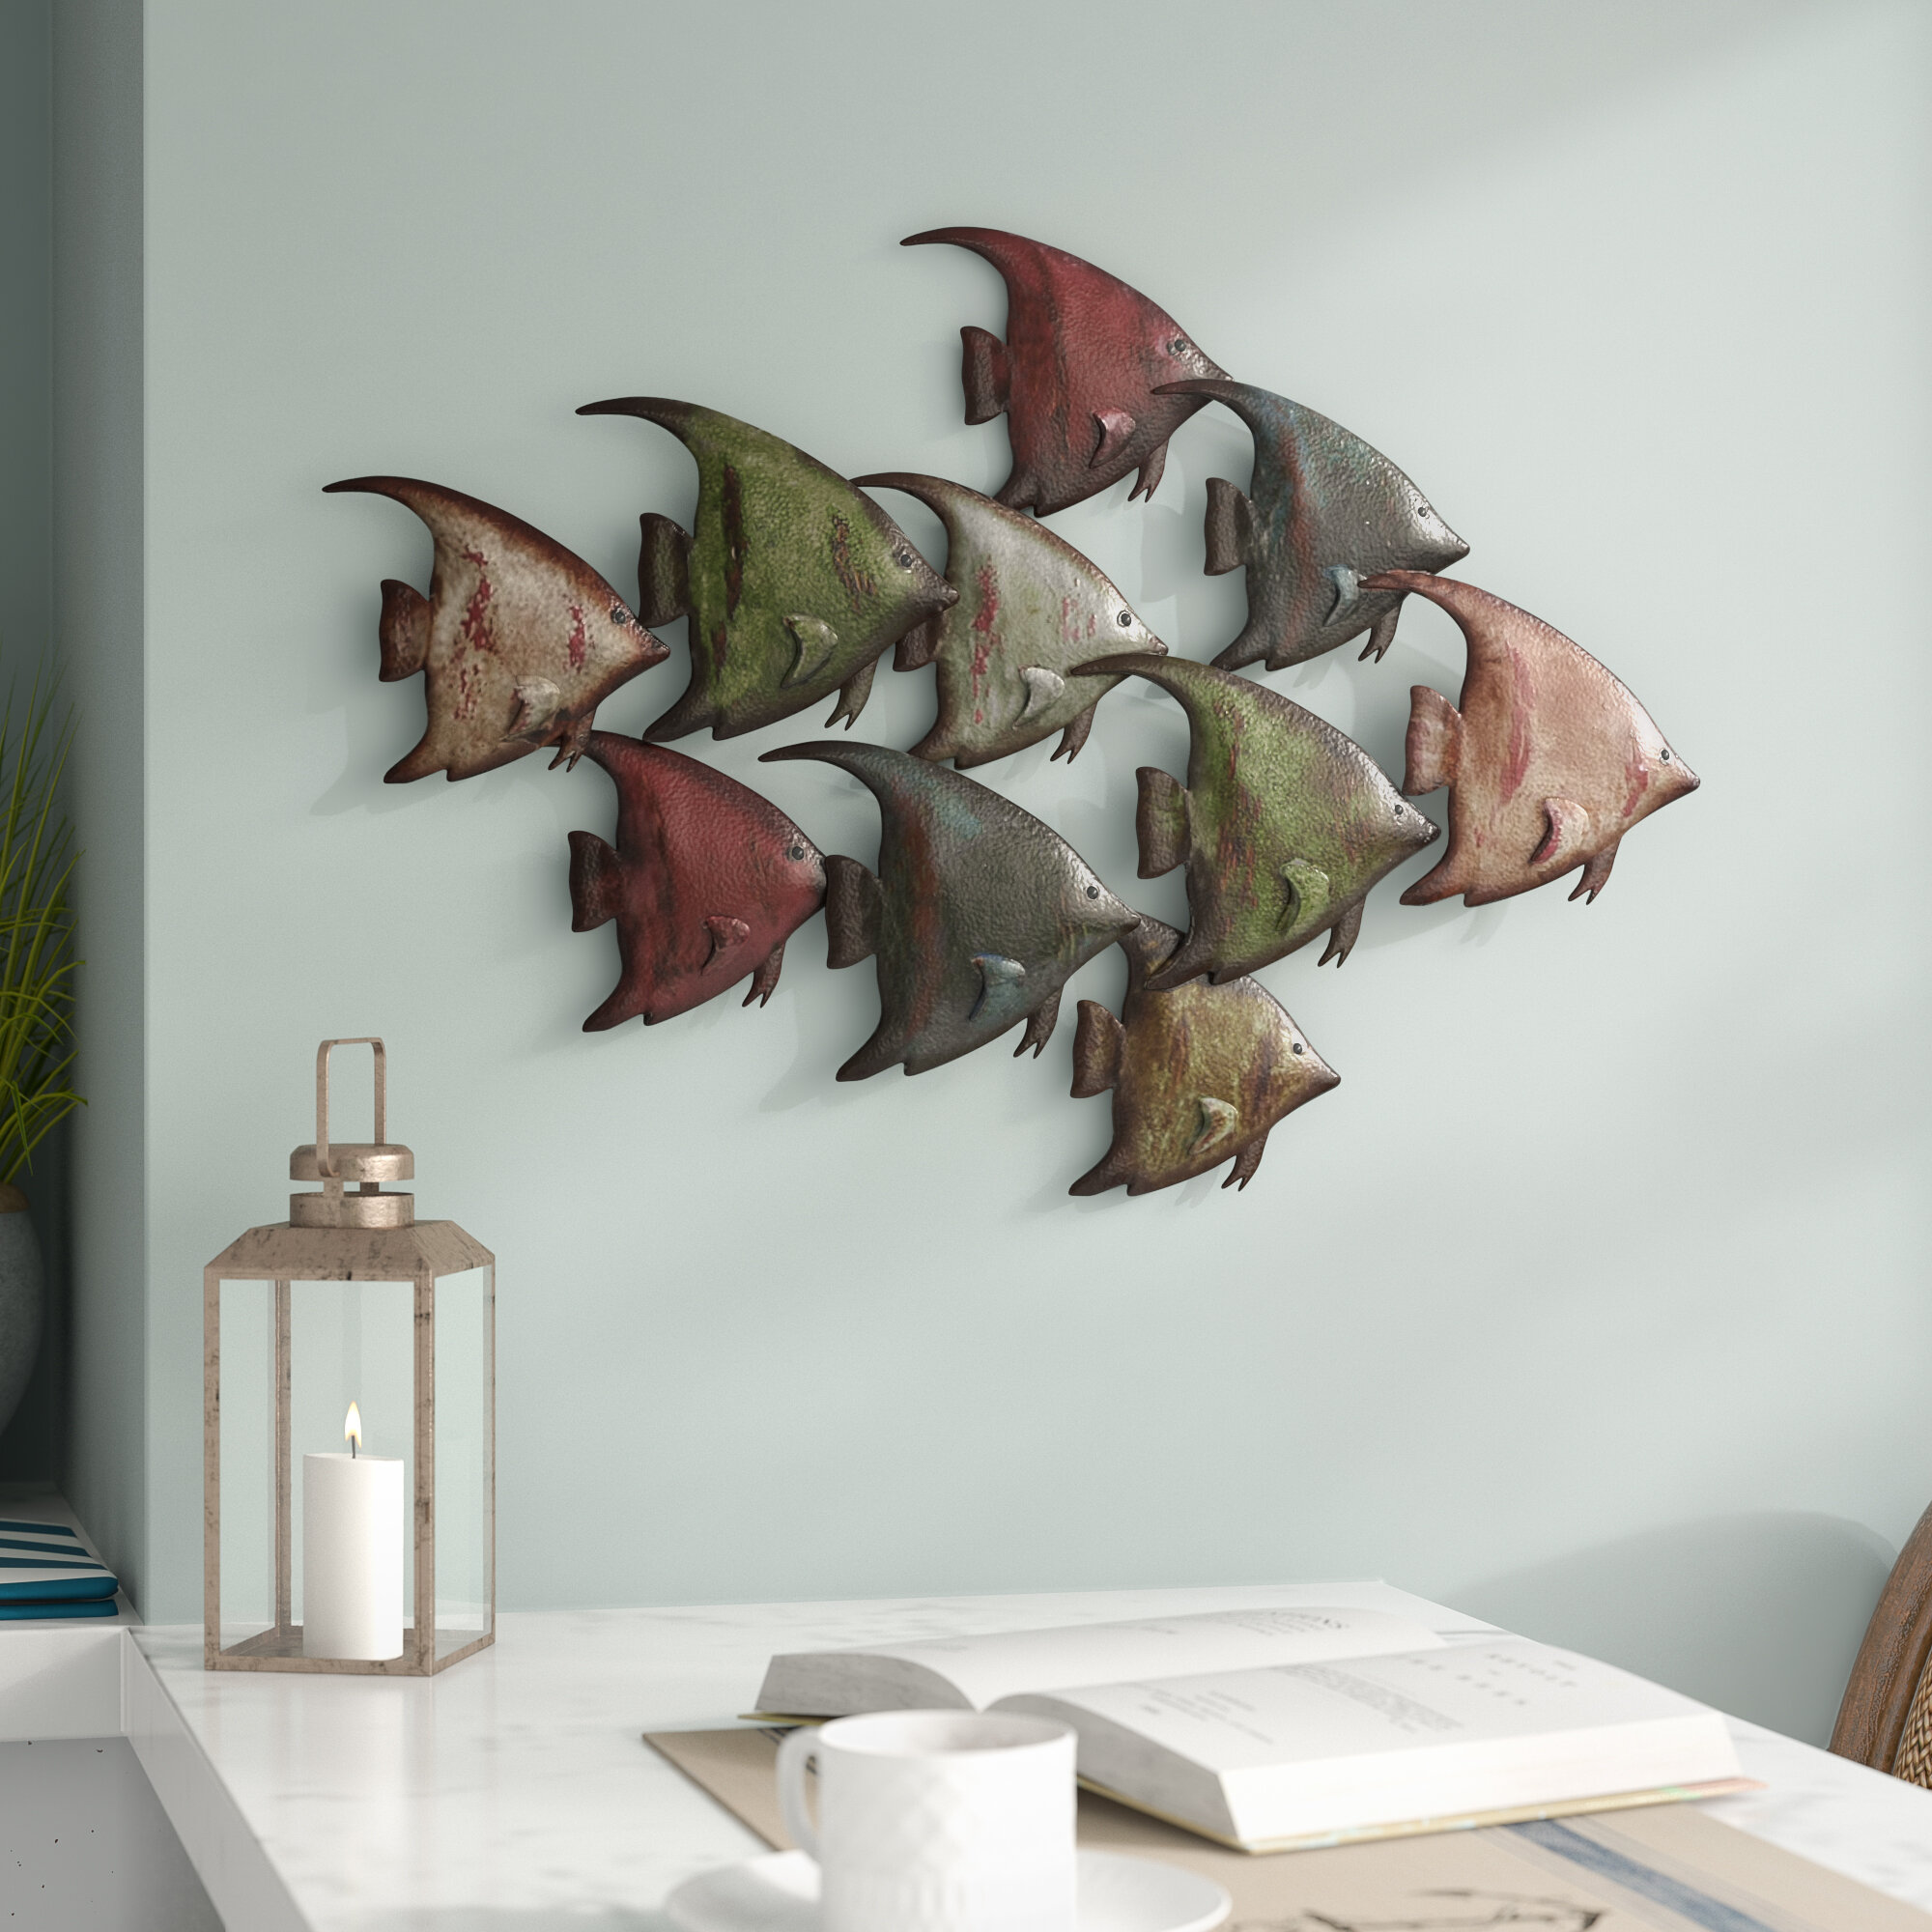 Beachcrest Home Coastal Metal Fish Wall Decor Reviews Wayfair